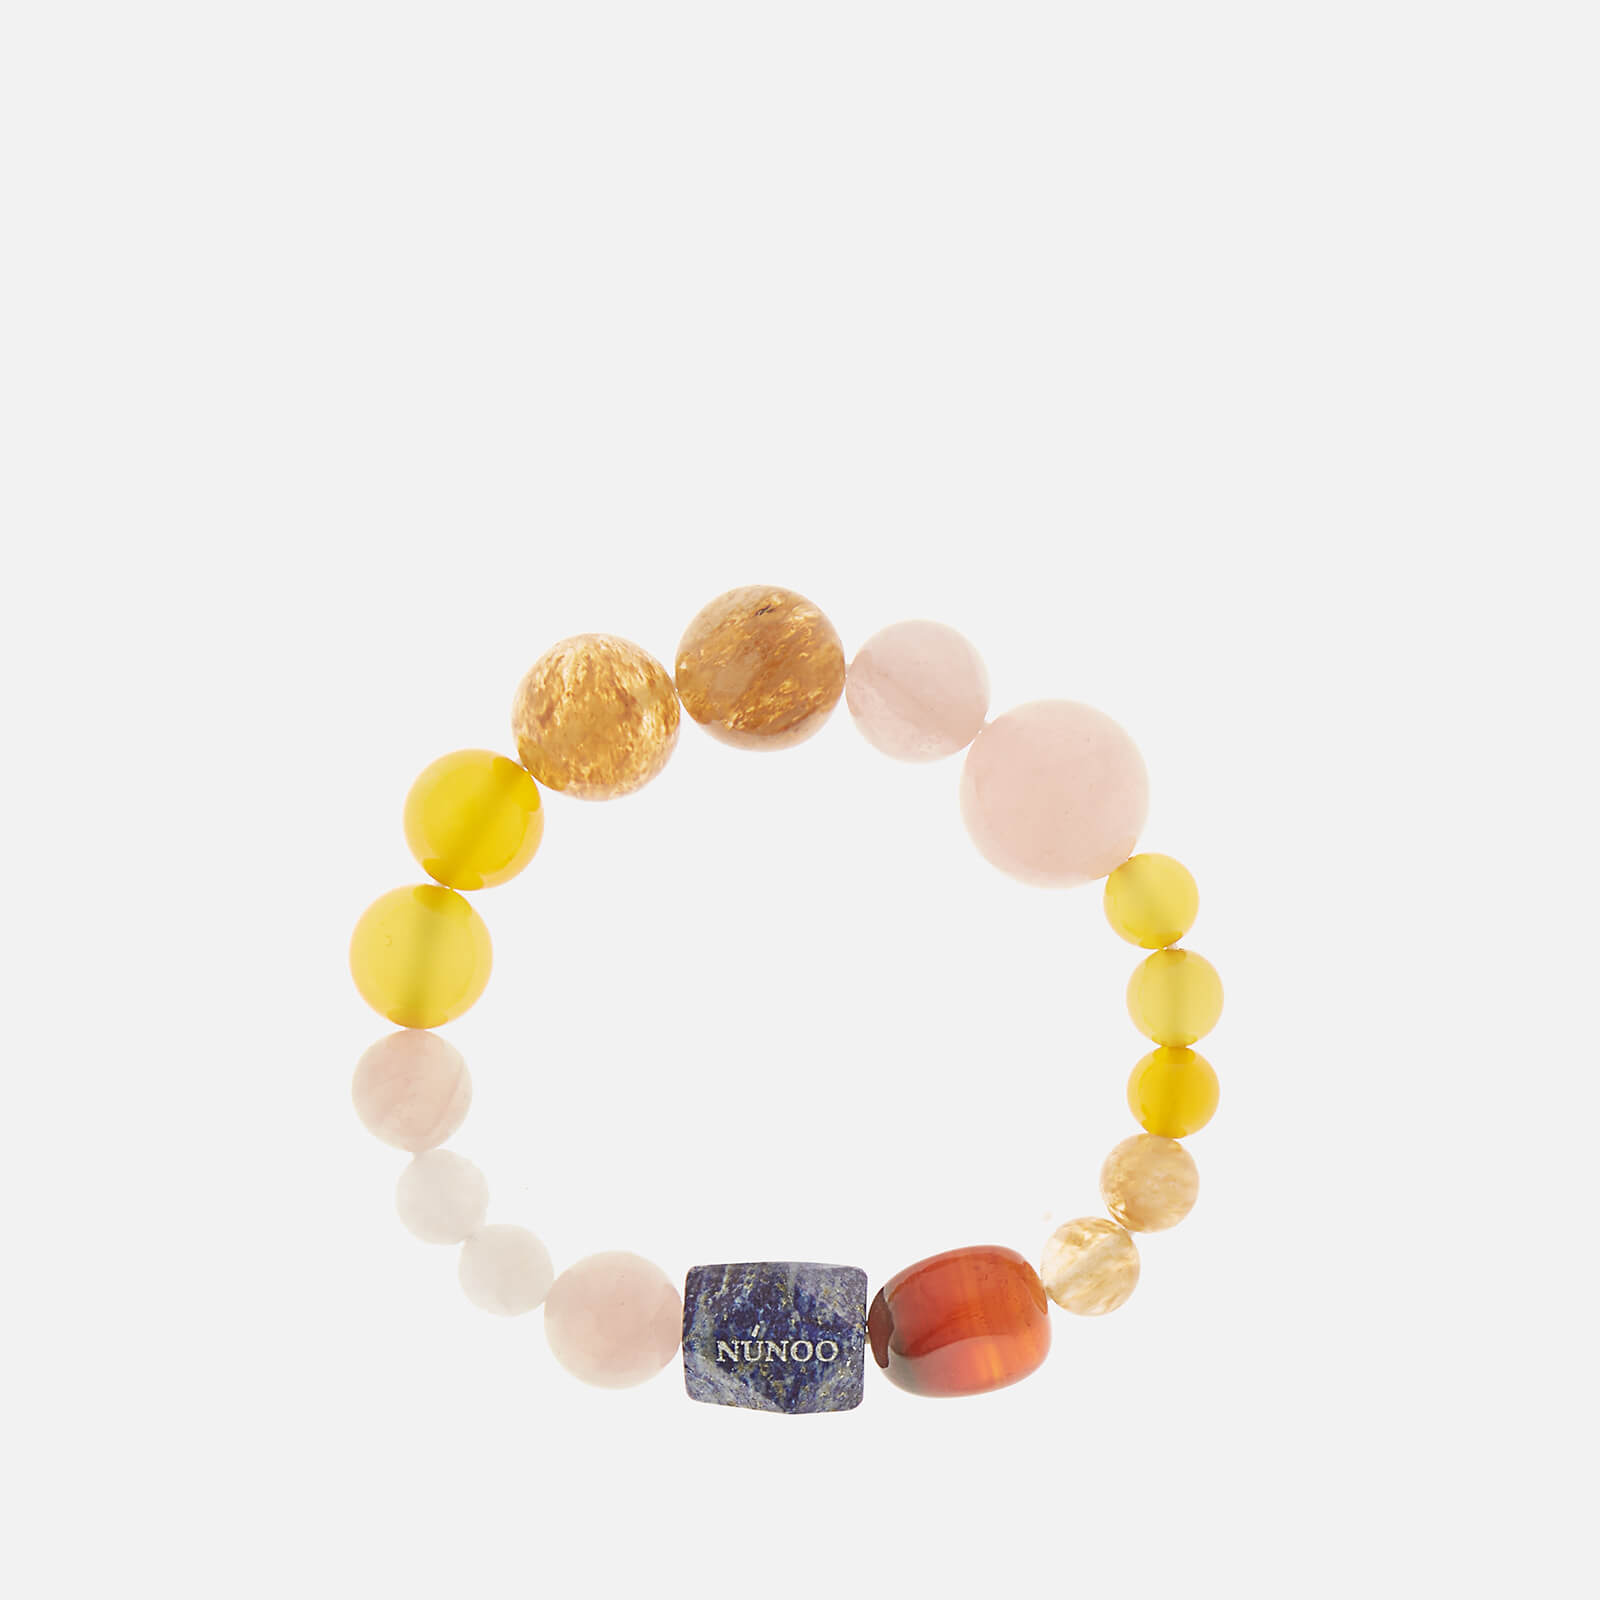 Núnoo – Núnoo Happy Yellow Crystal Bracelet à <del>64,35 €</del> 19,89 € chez MyBag